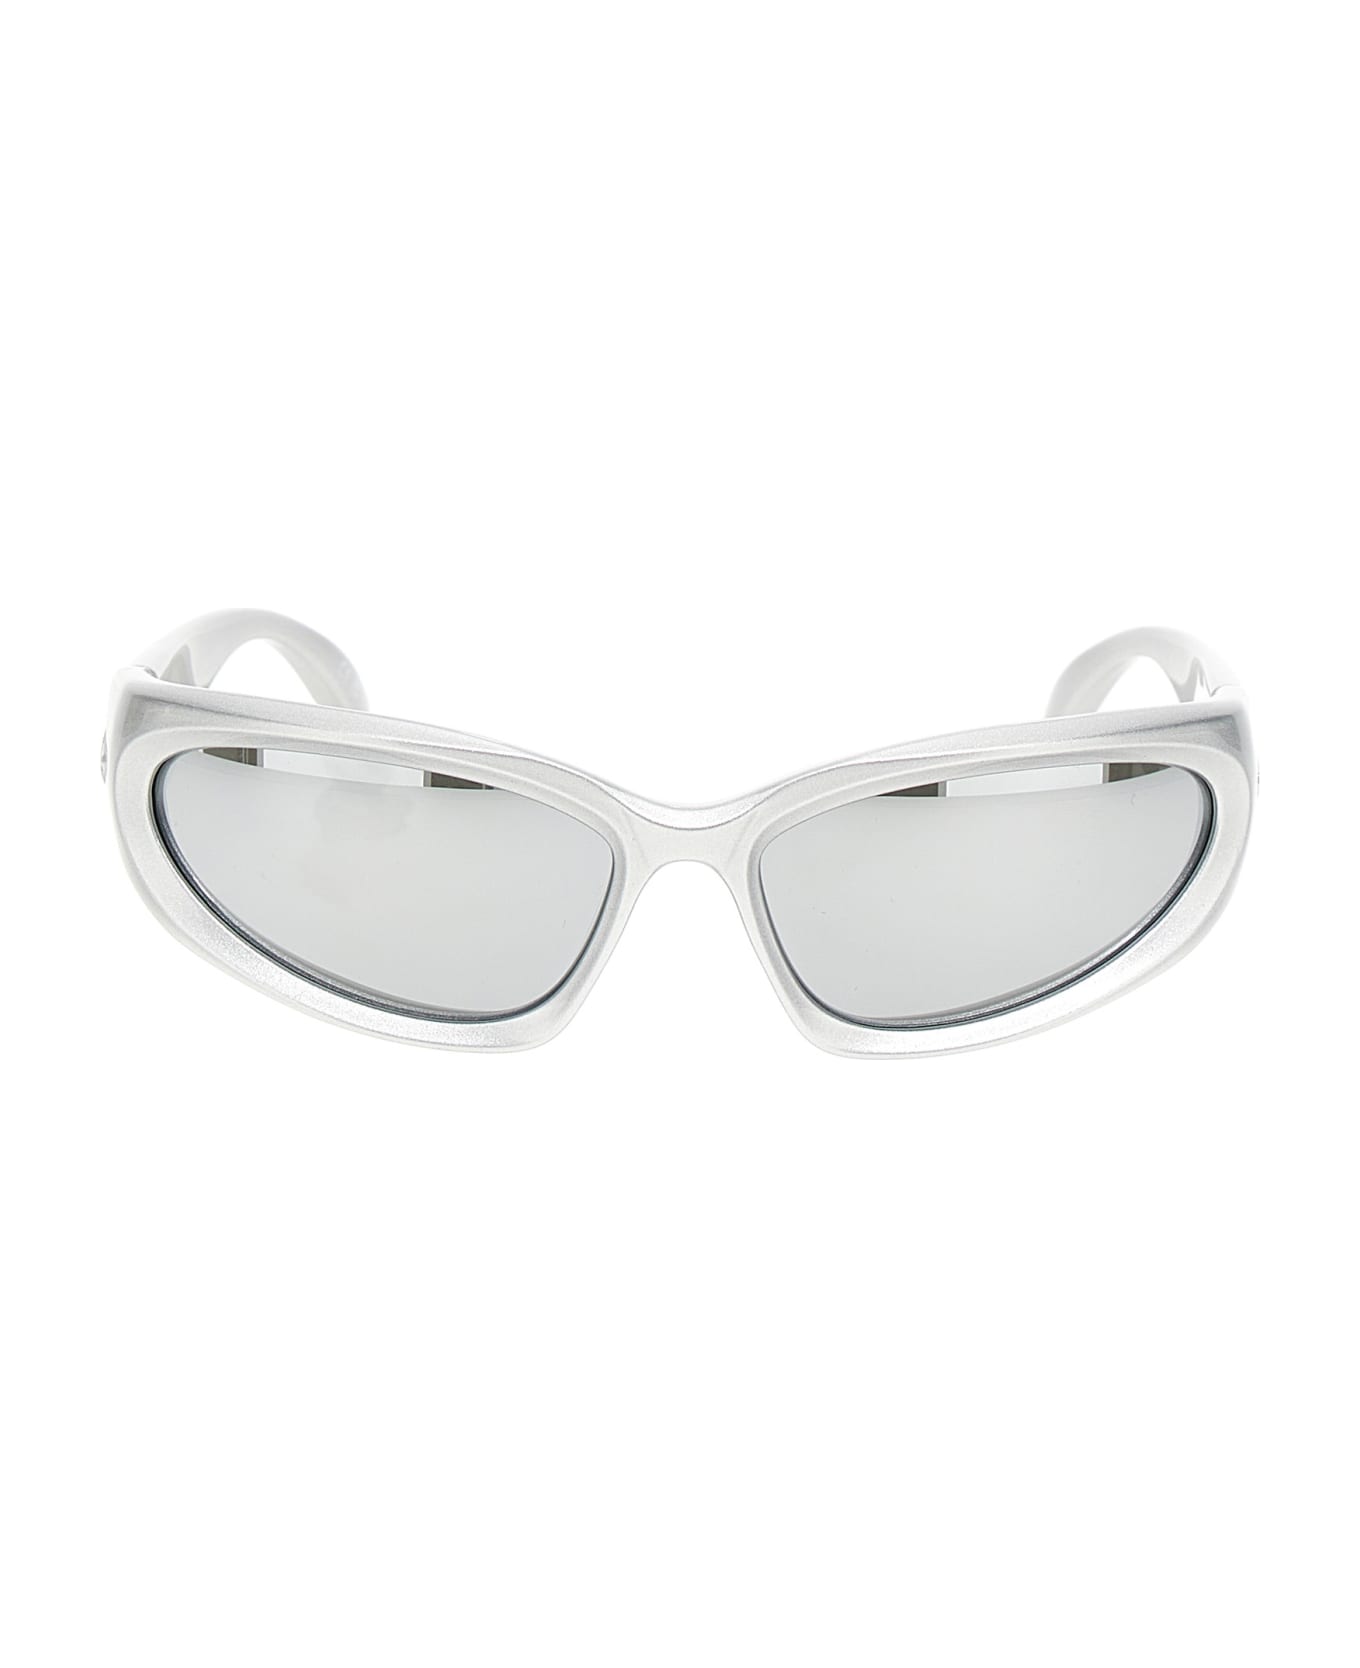 Balenciaga Eyewear Swift Oval Sunglasses - Metallic